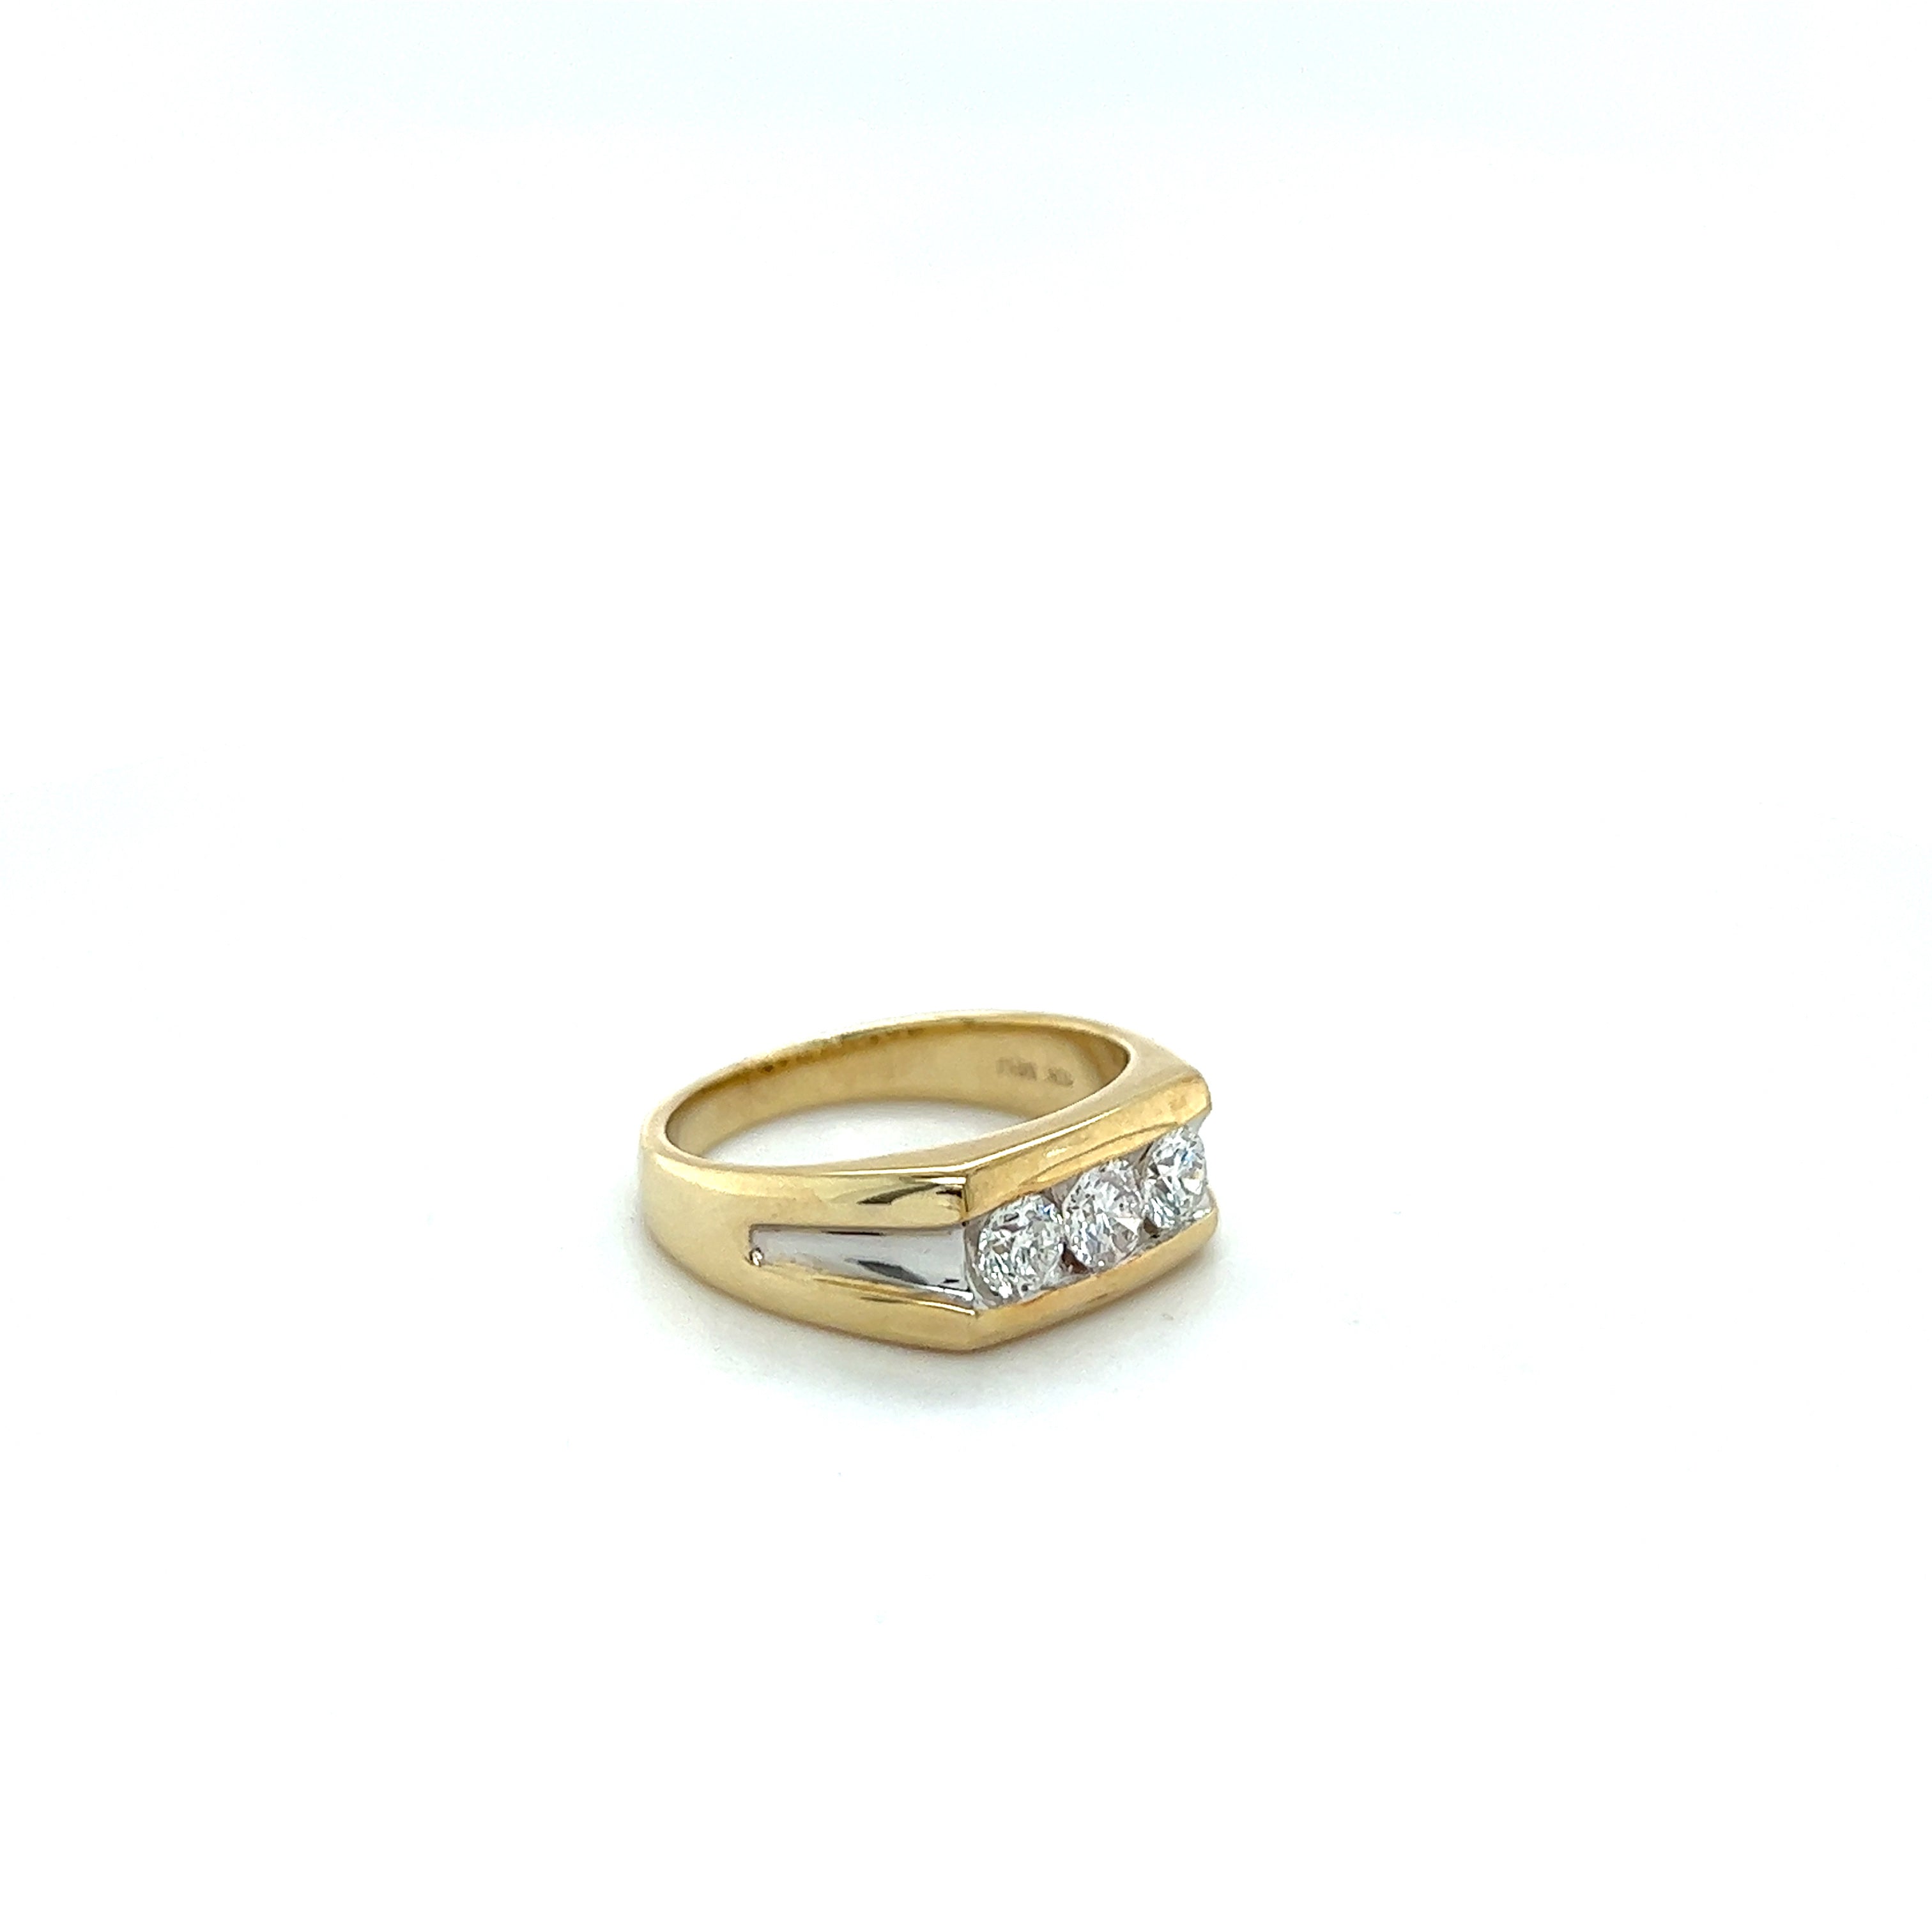 10ct yellow gold diamond ring.